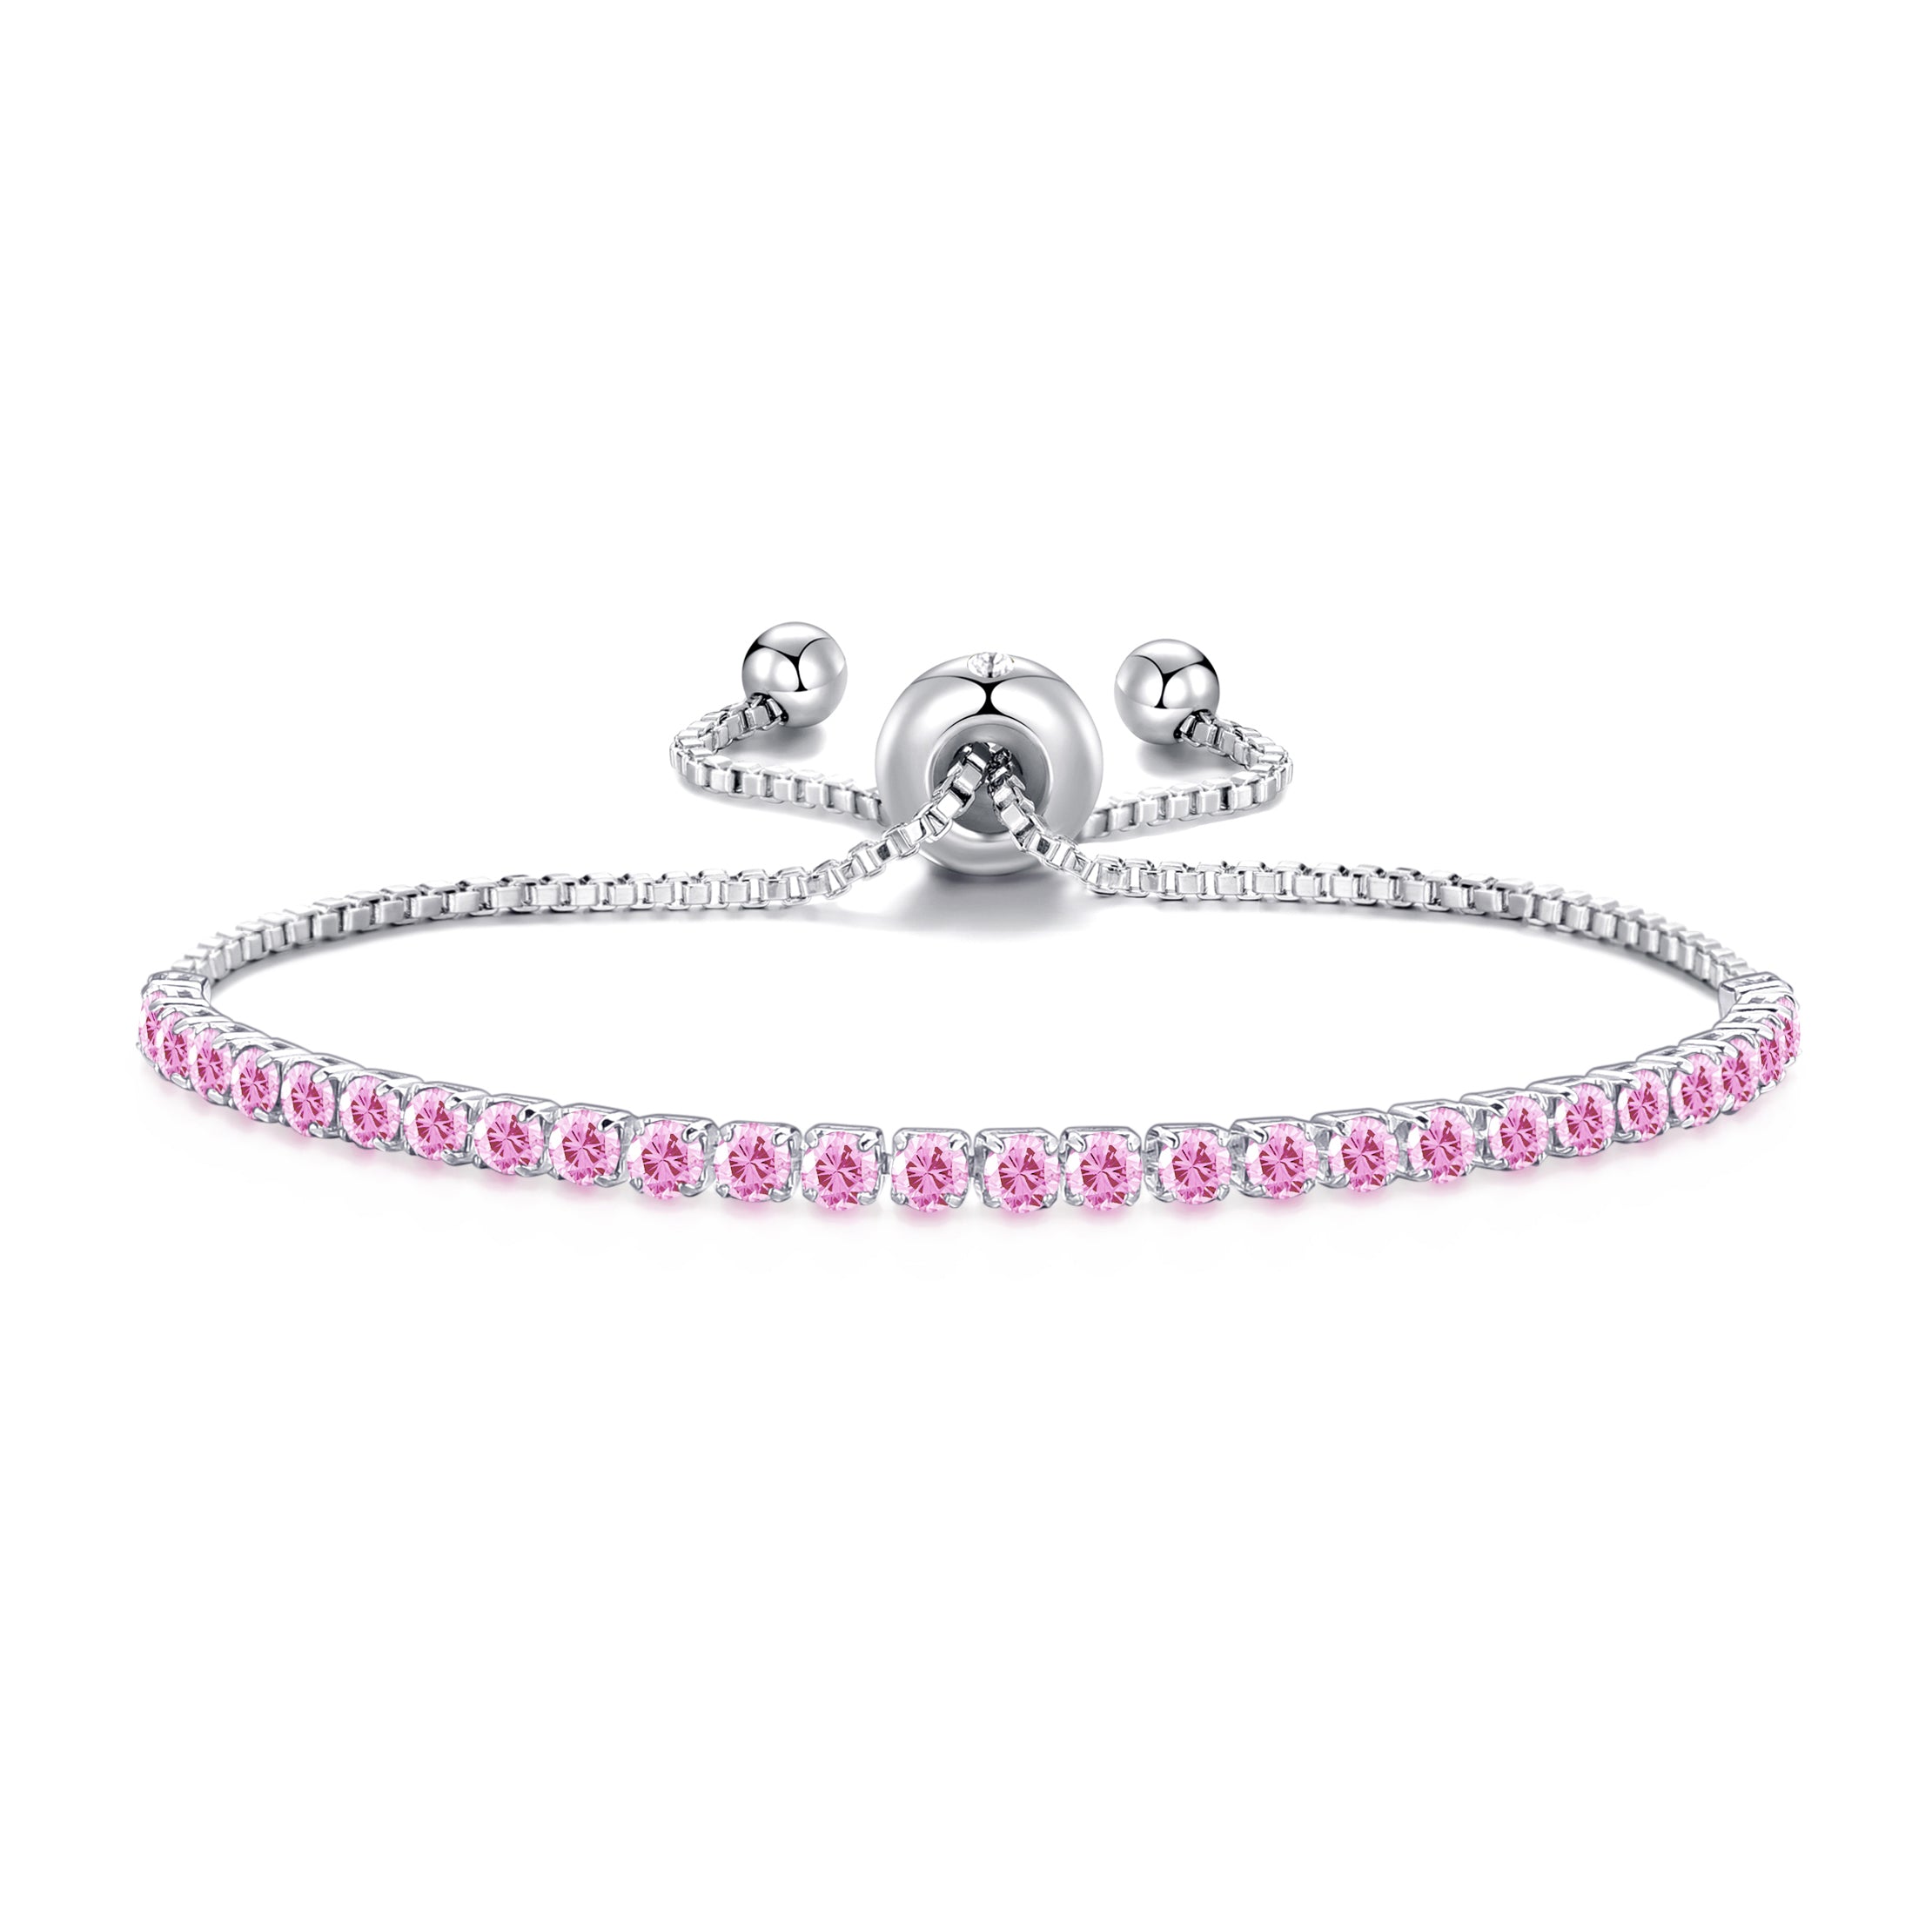 October Birthstone Friendship Bracelet with Tourmaline Zircondia® Crystals